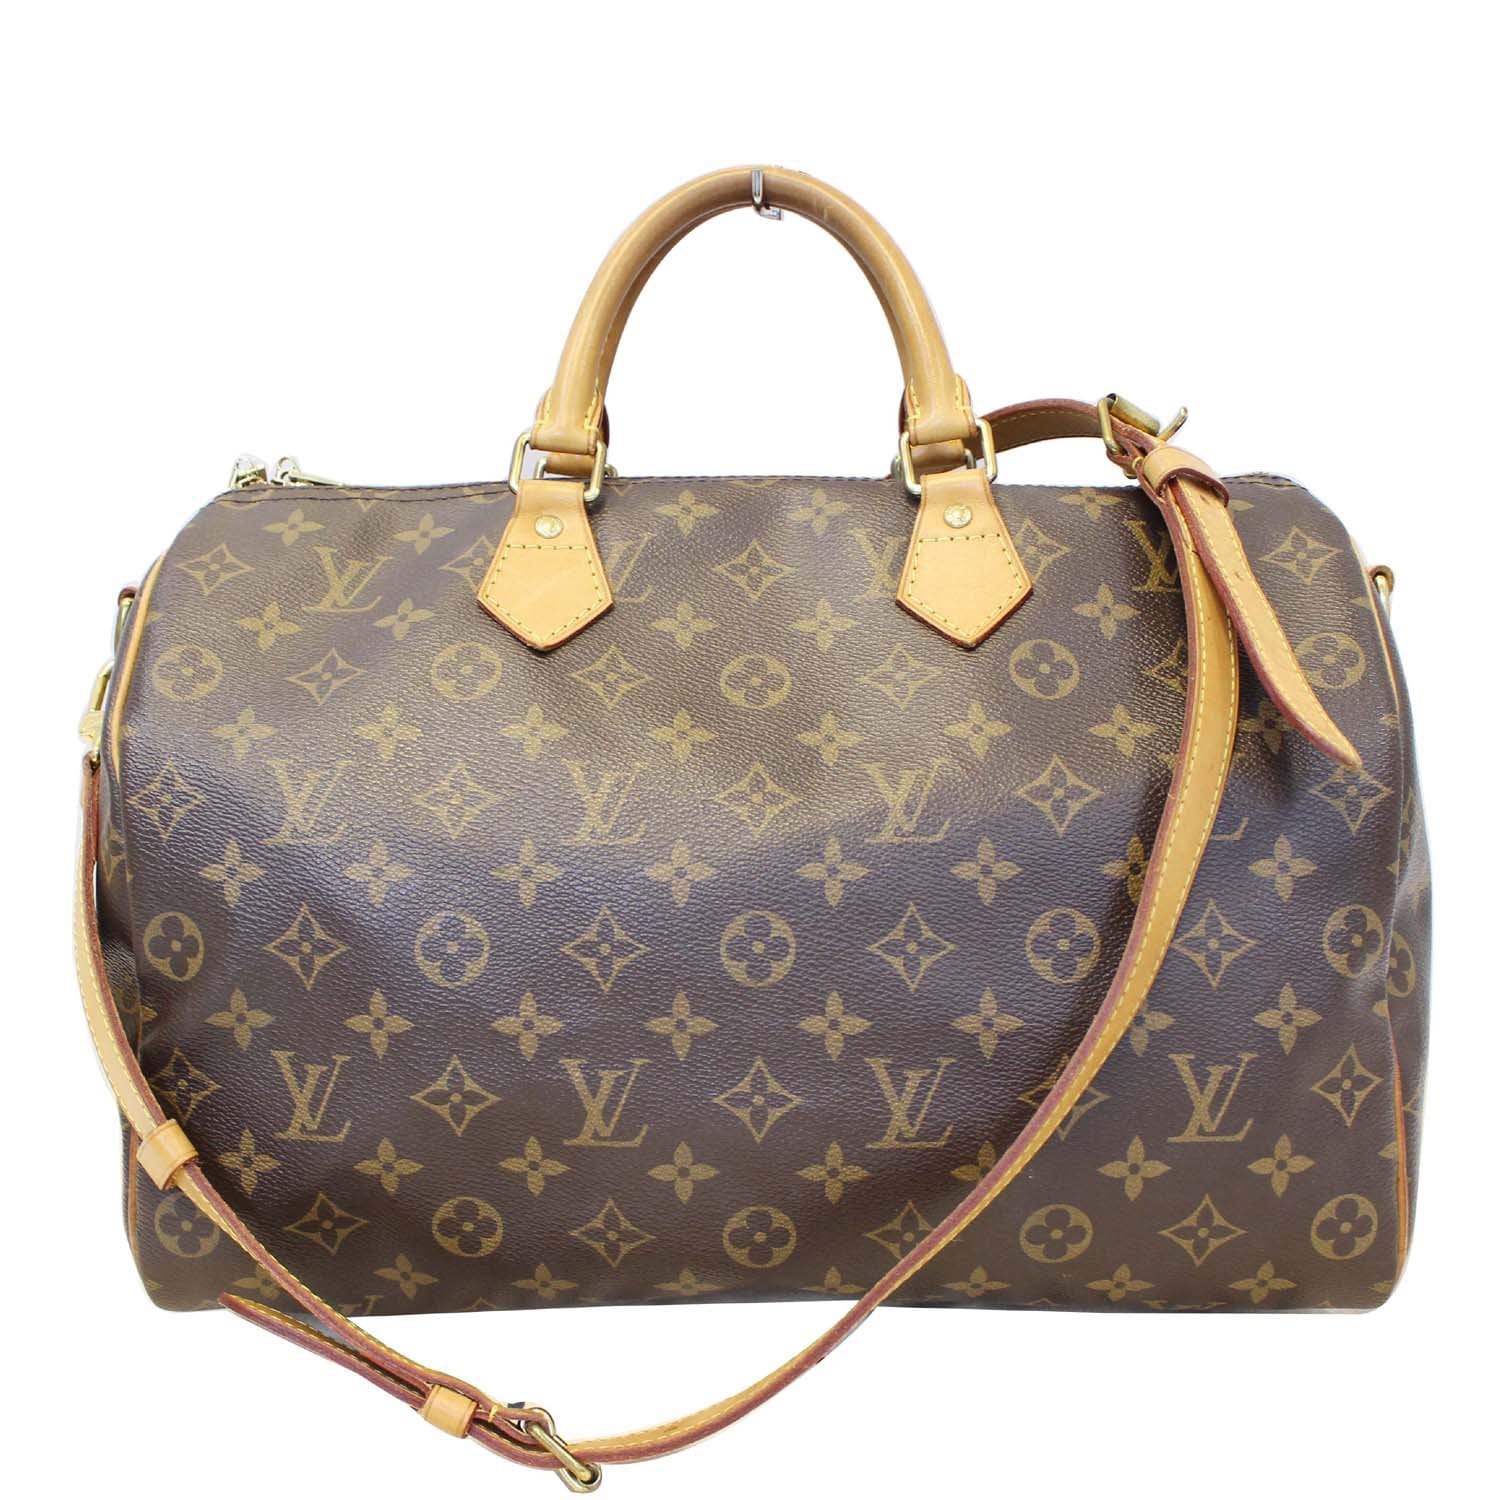 Louis VUITTON Speedy 35 travel bag in monogram coated c…